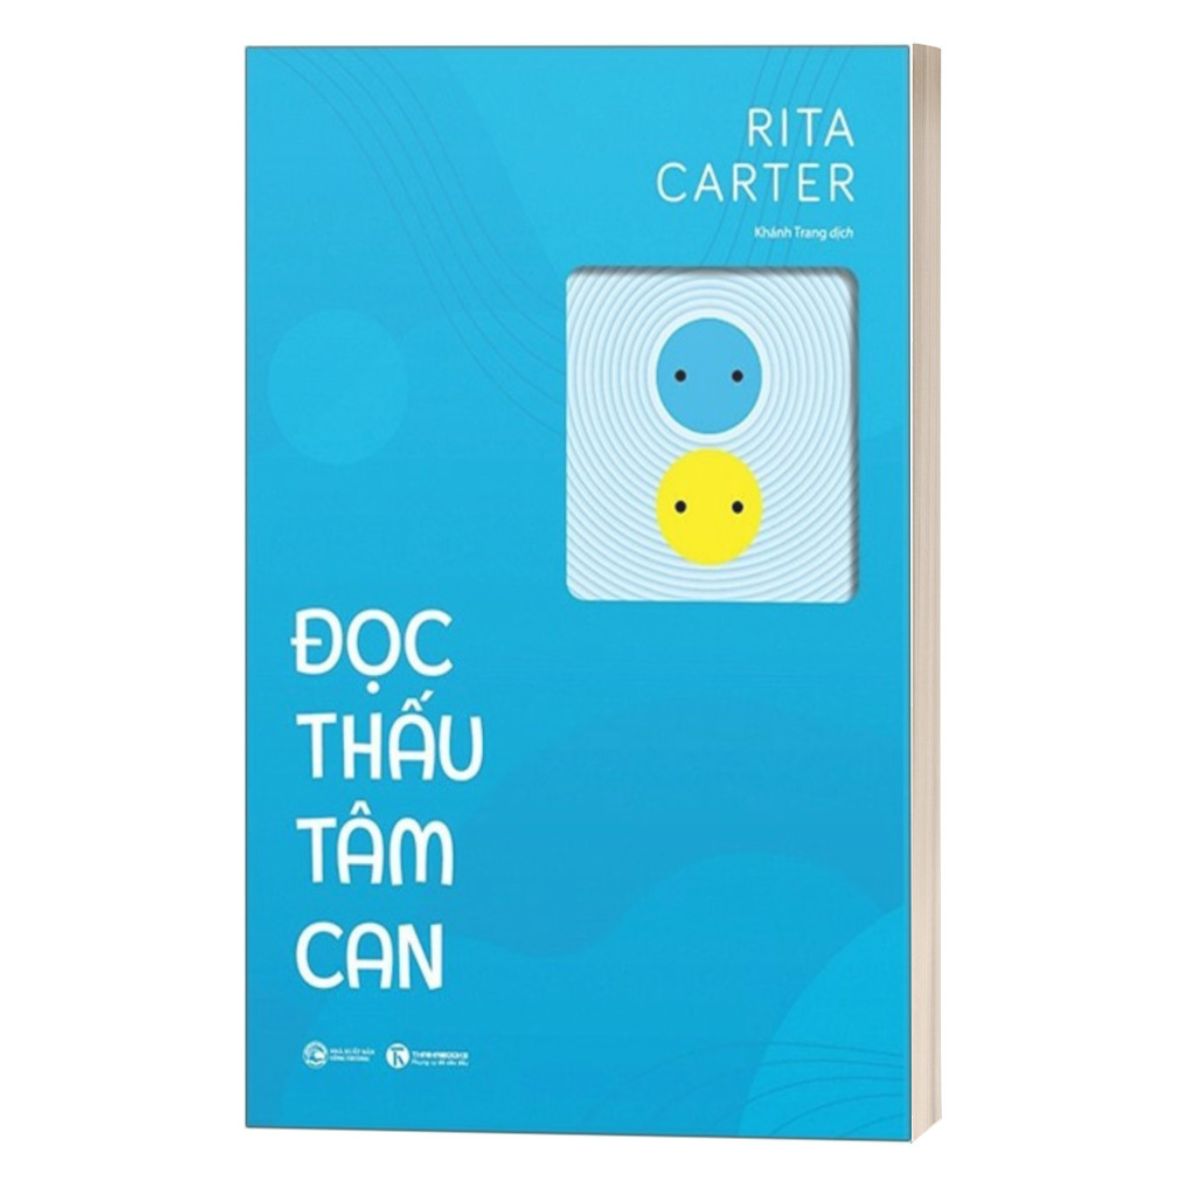 Đọc Thấu Tâm Can - Rita Carter